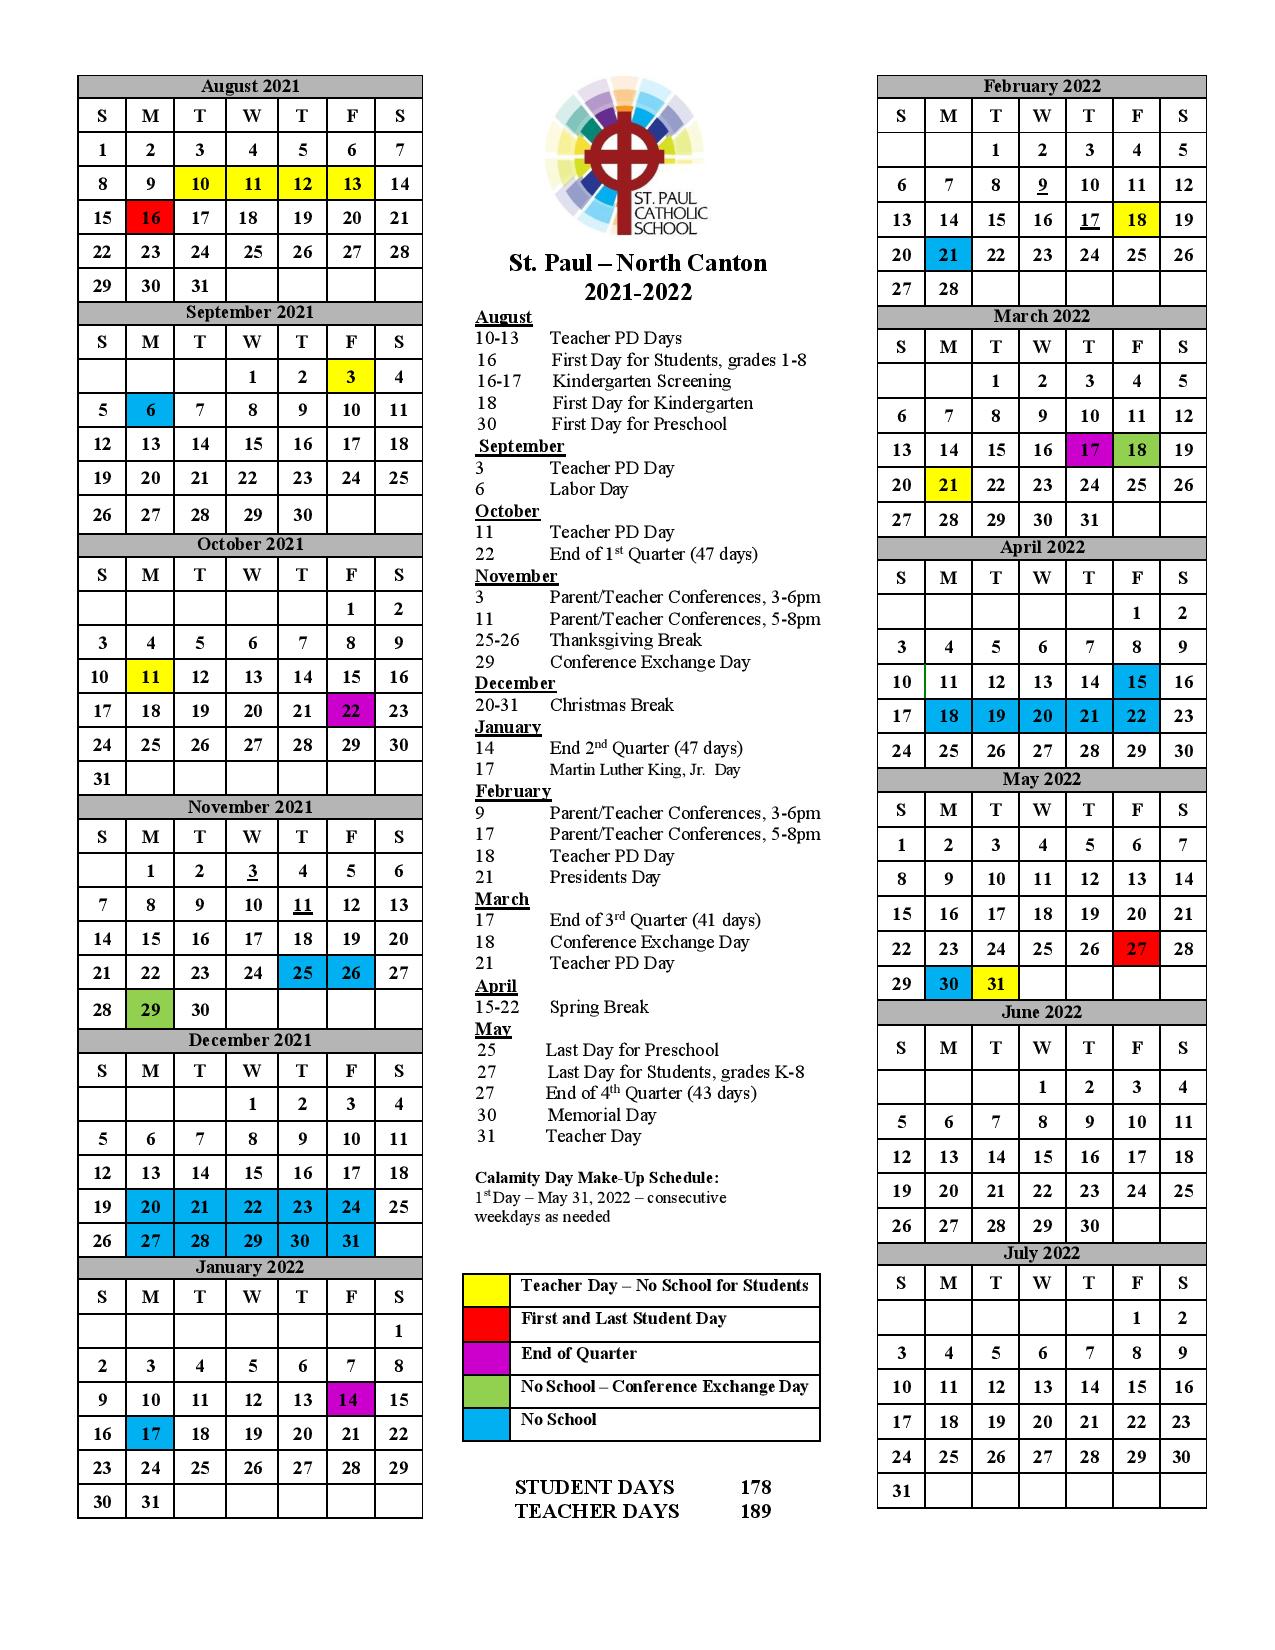 Tcaps Calendar 2022 Academic Calendar 2021-22